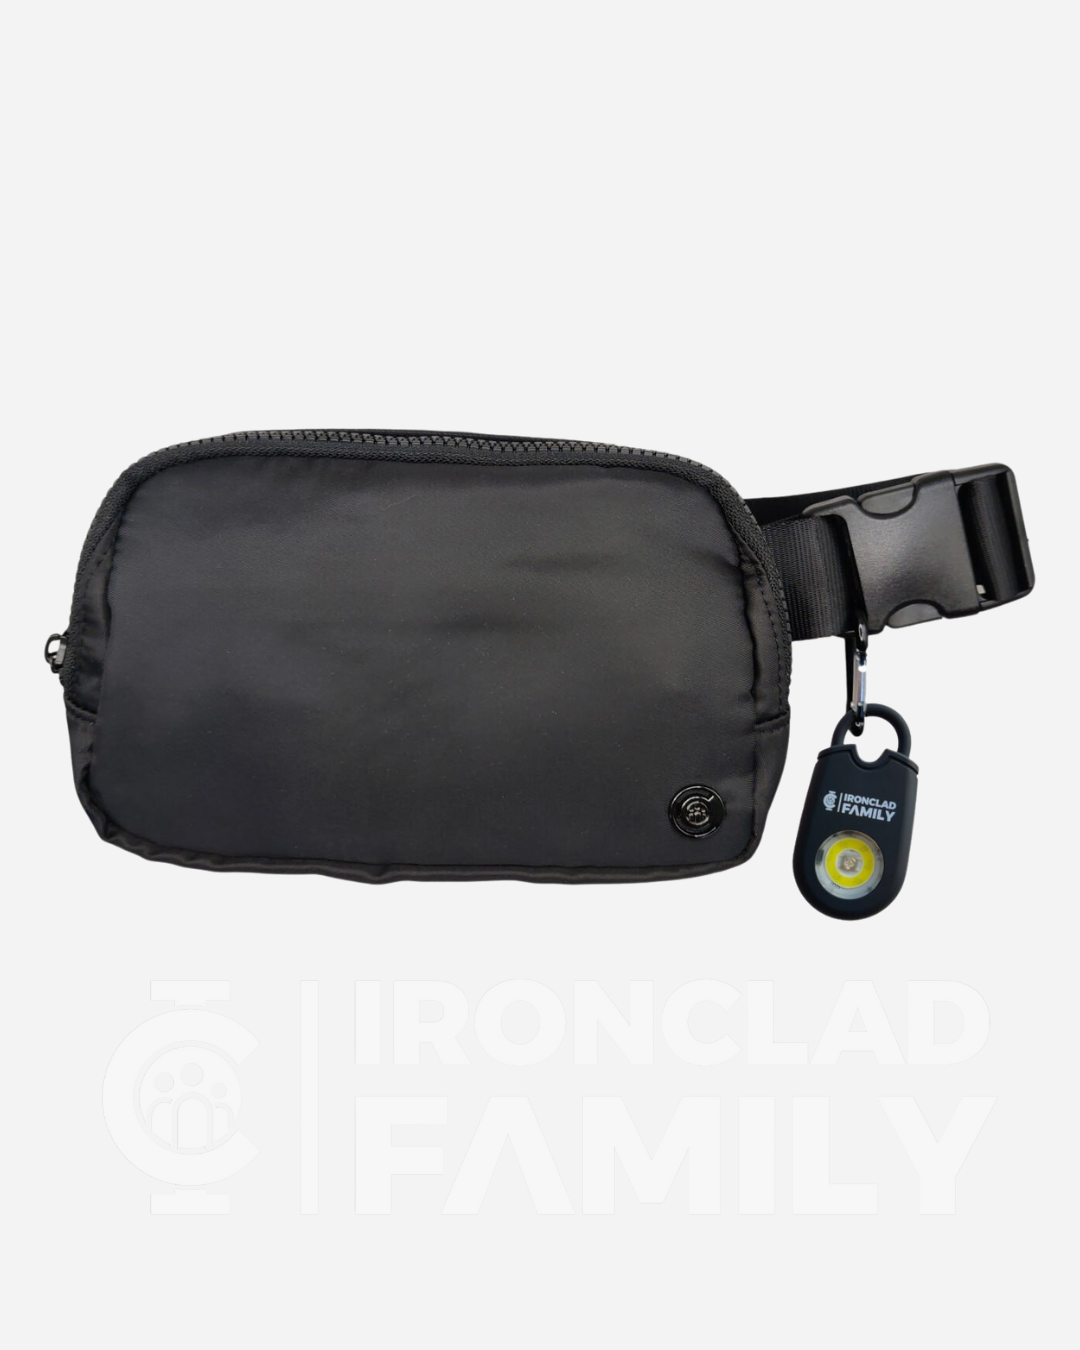 Black personal alarm crossbody belt bag with a persona alarm